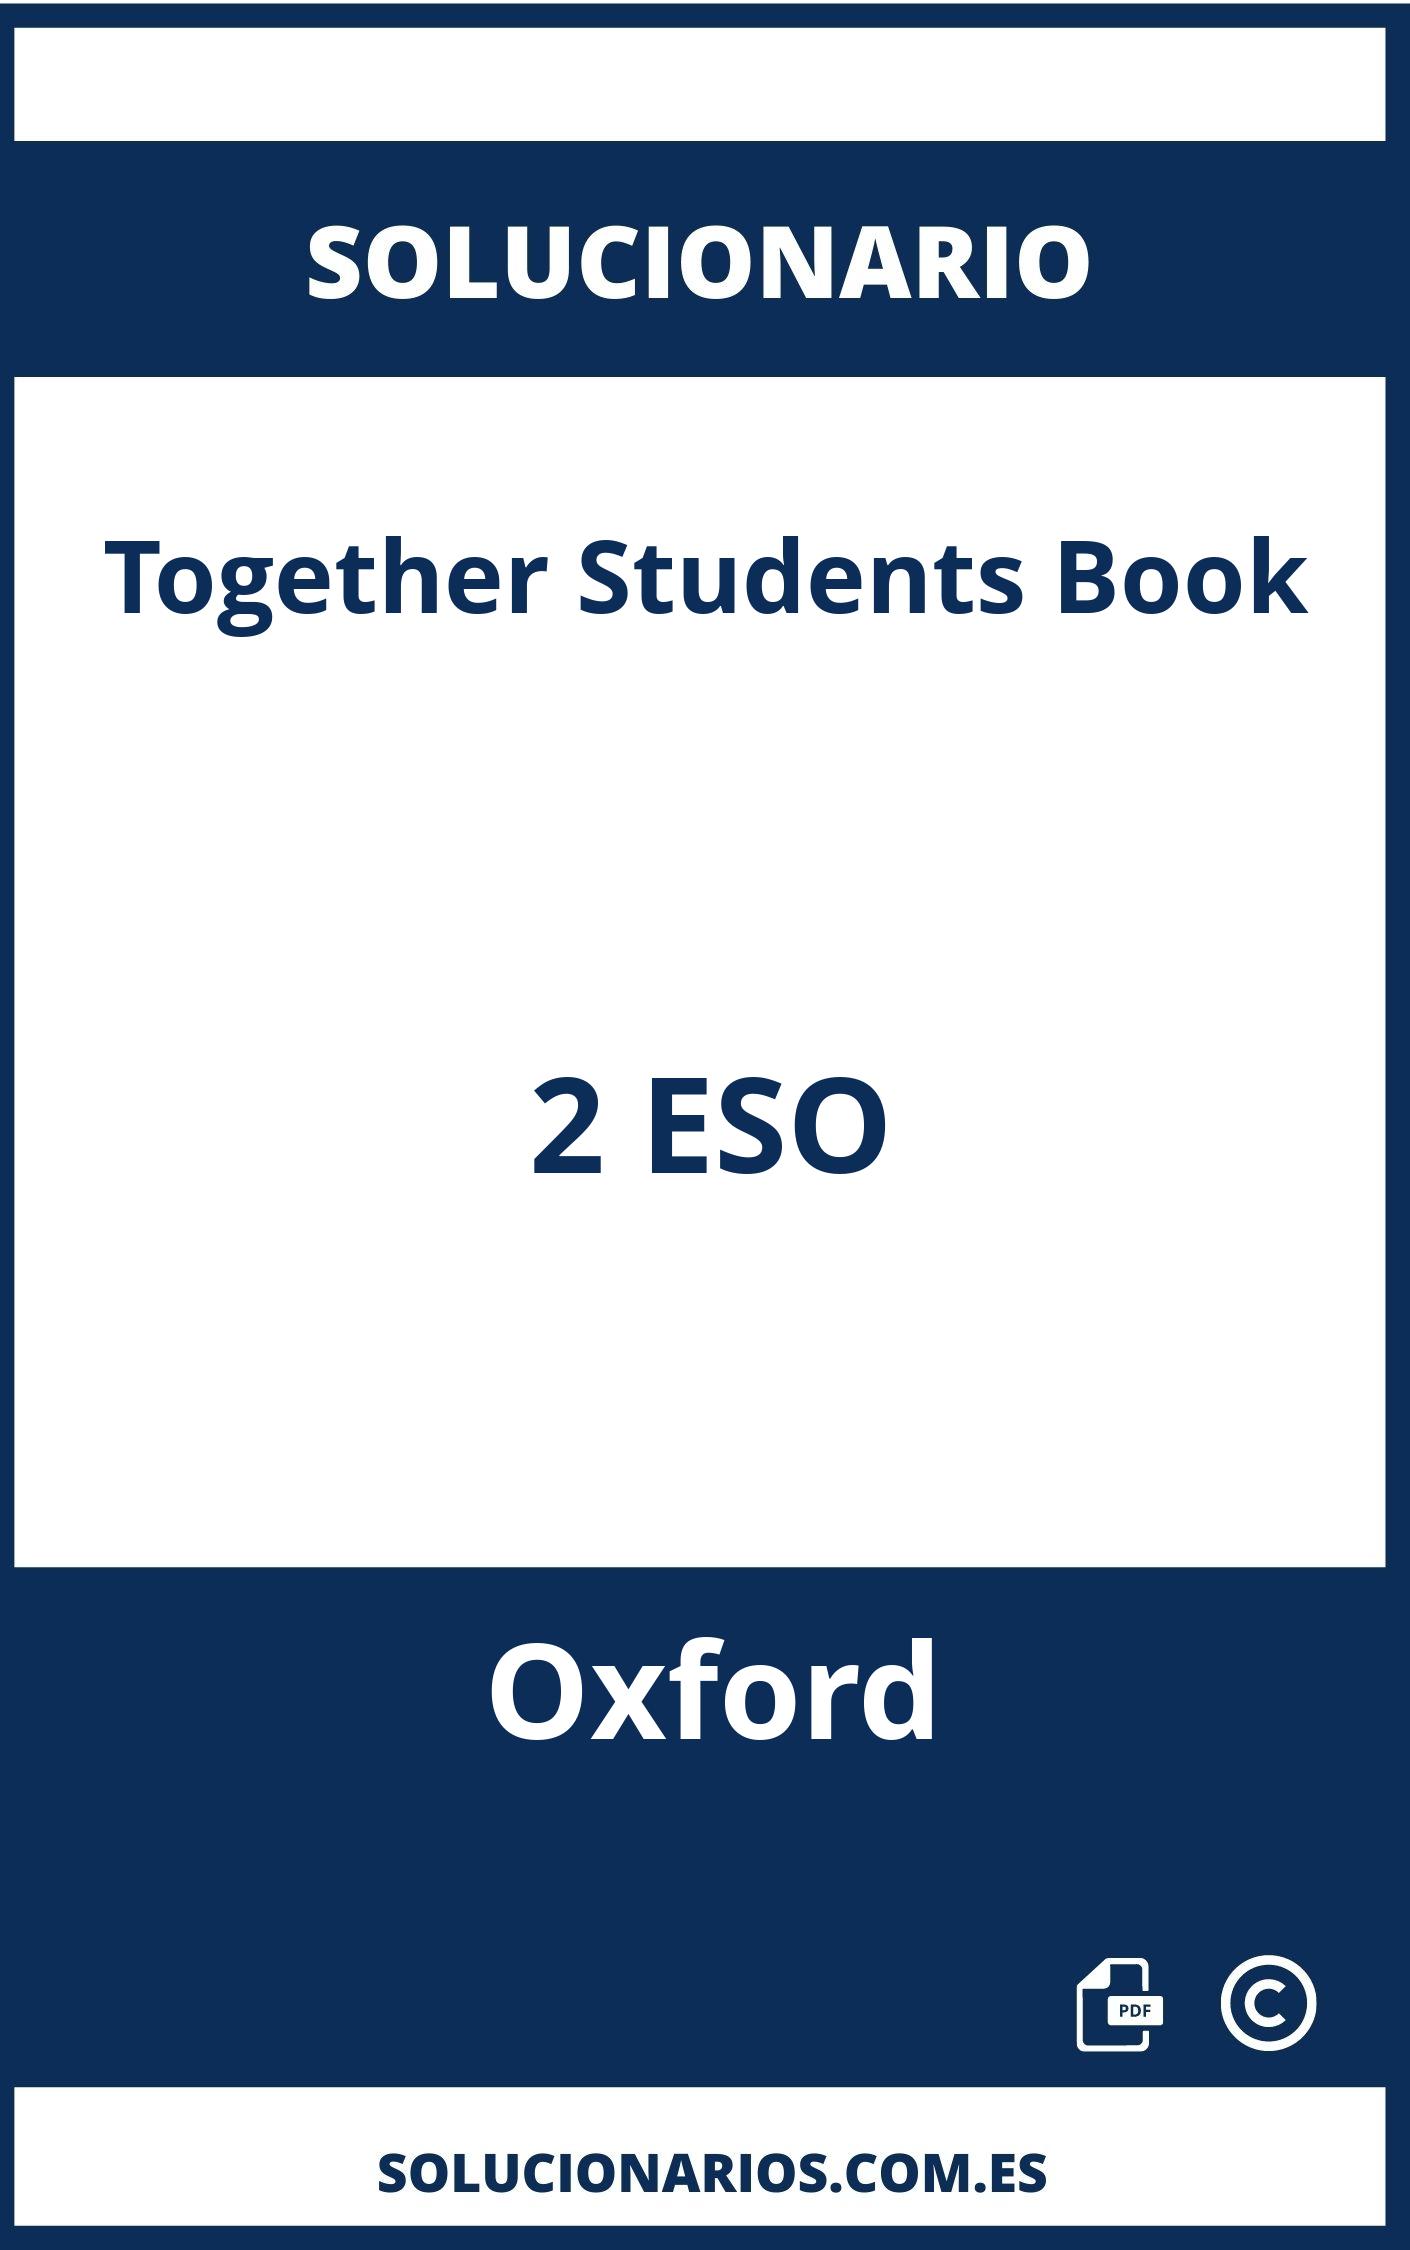 Solucionario Together Students Book 2 ESO Oxford